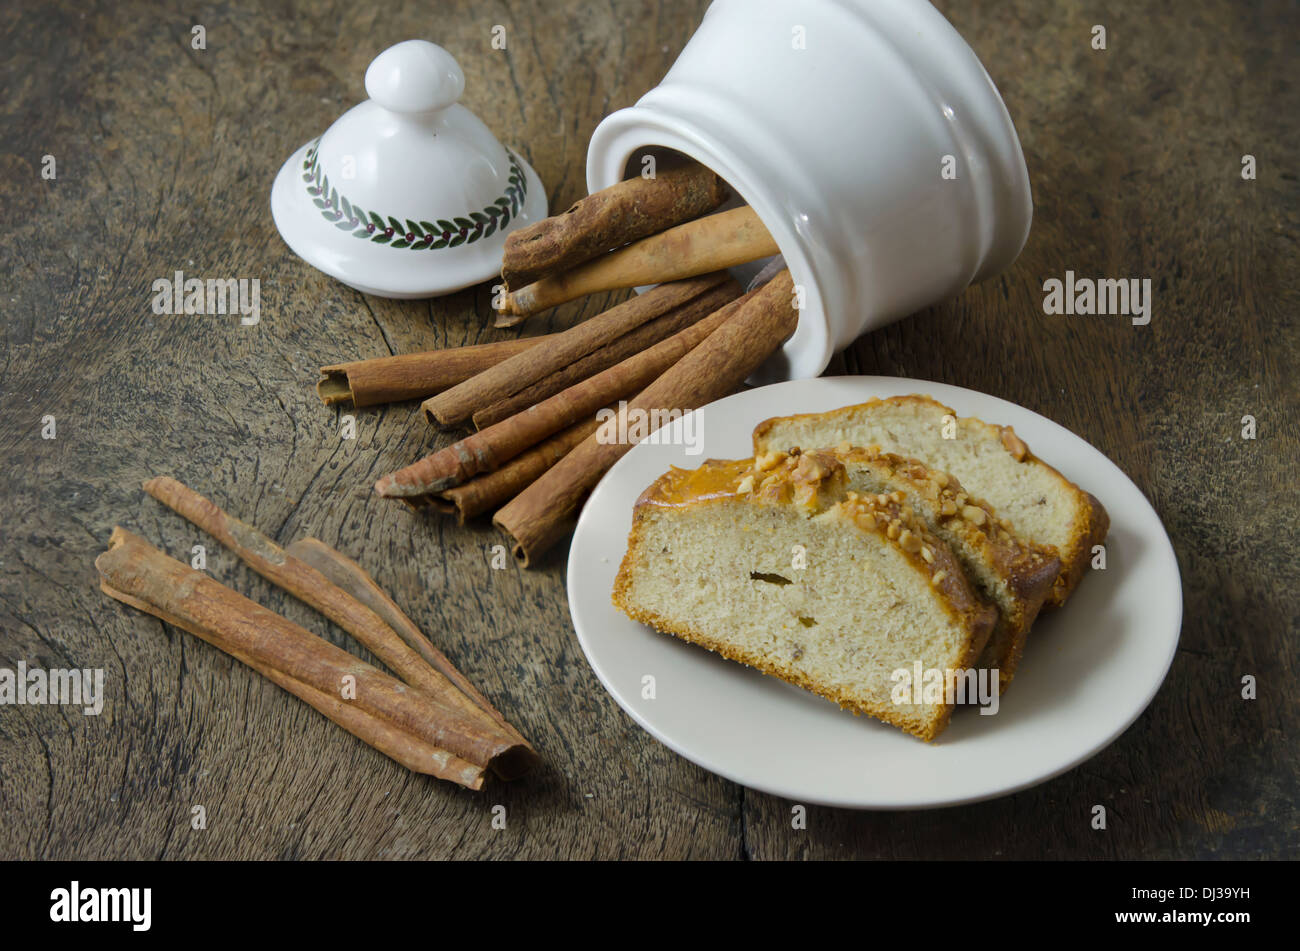 White bowl with cinnamon sticks and slice of banana cake on plate Stock Photo